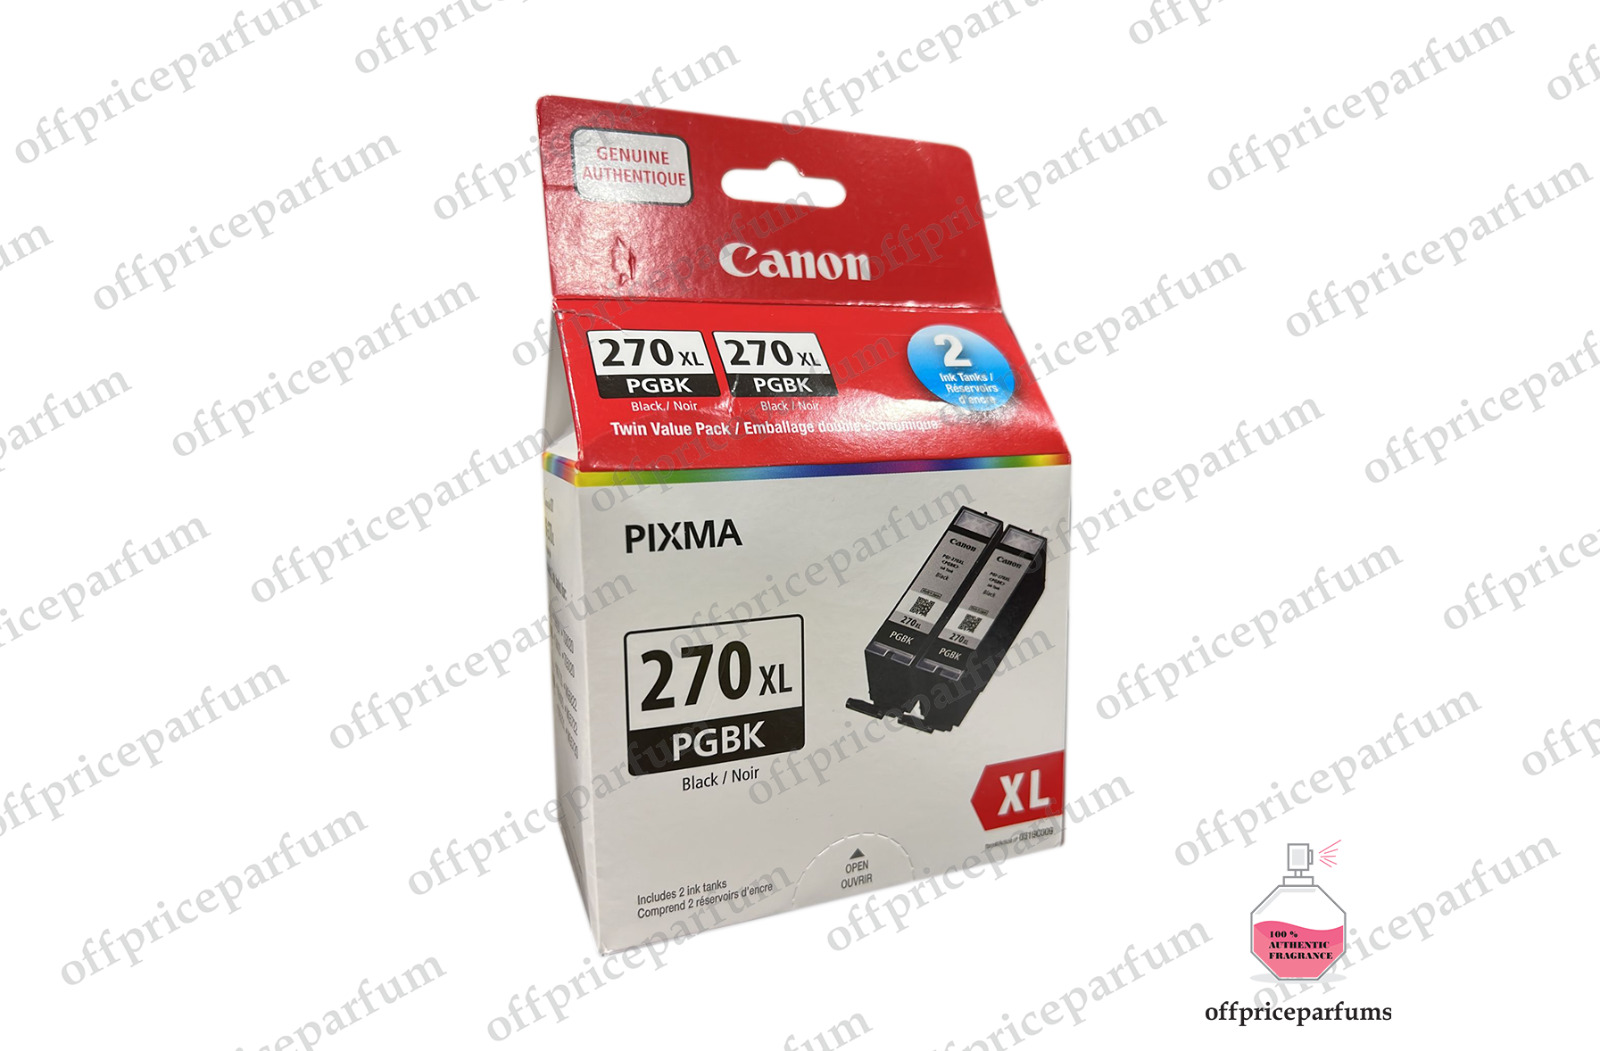 Genuine Canon Pixma ORIGINAL OEM PGBK 270XL Black Ink Cartridge Twin Value Pack